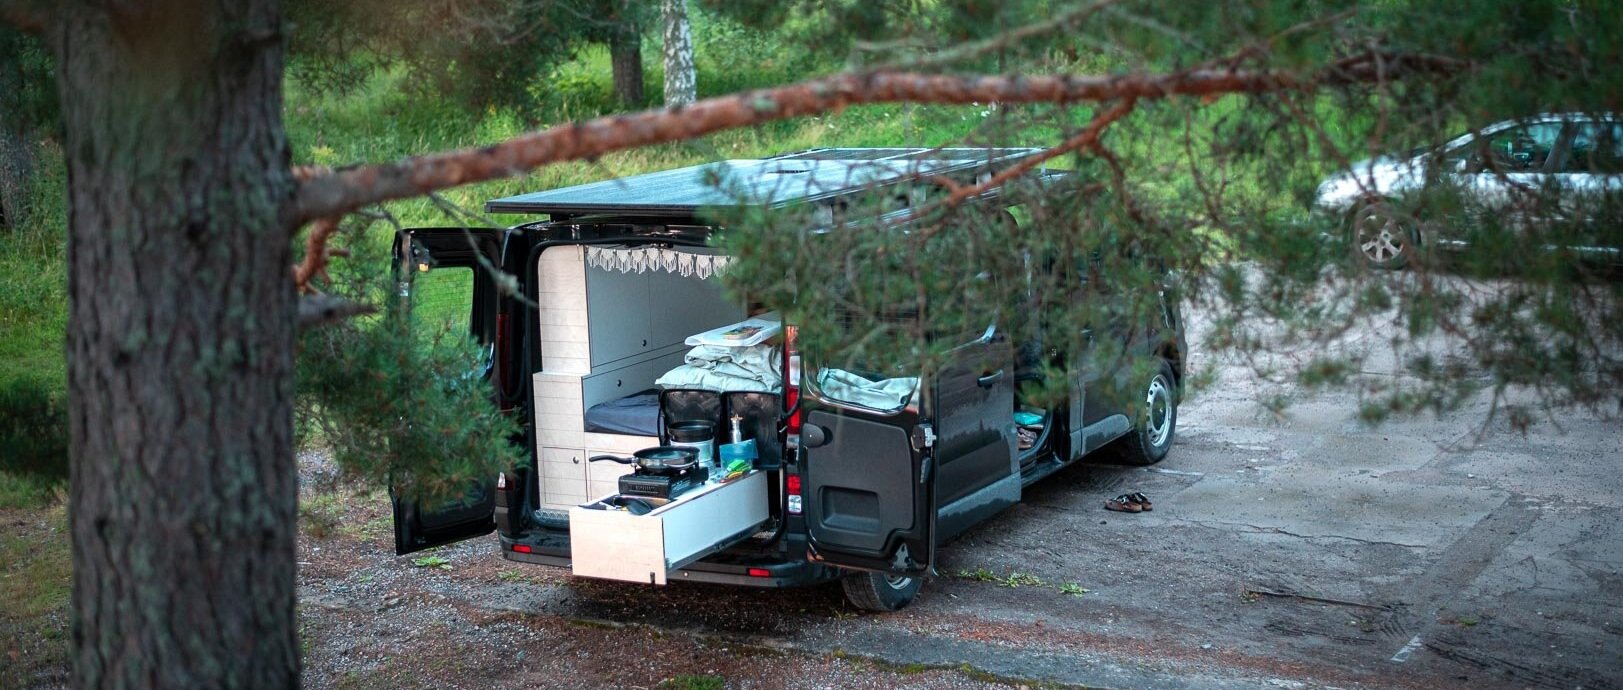 VANUE selbstklebende Wärmedämmplatte für Campervans, Wohnmobile